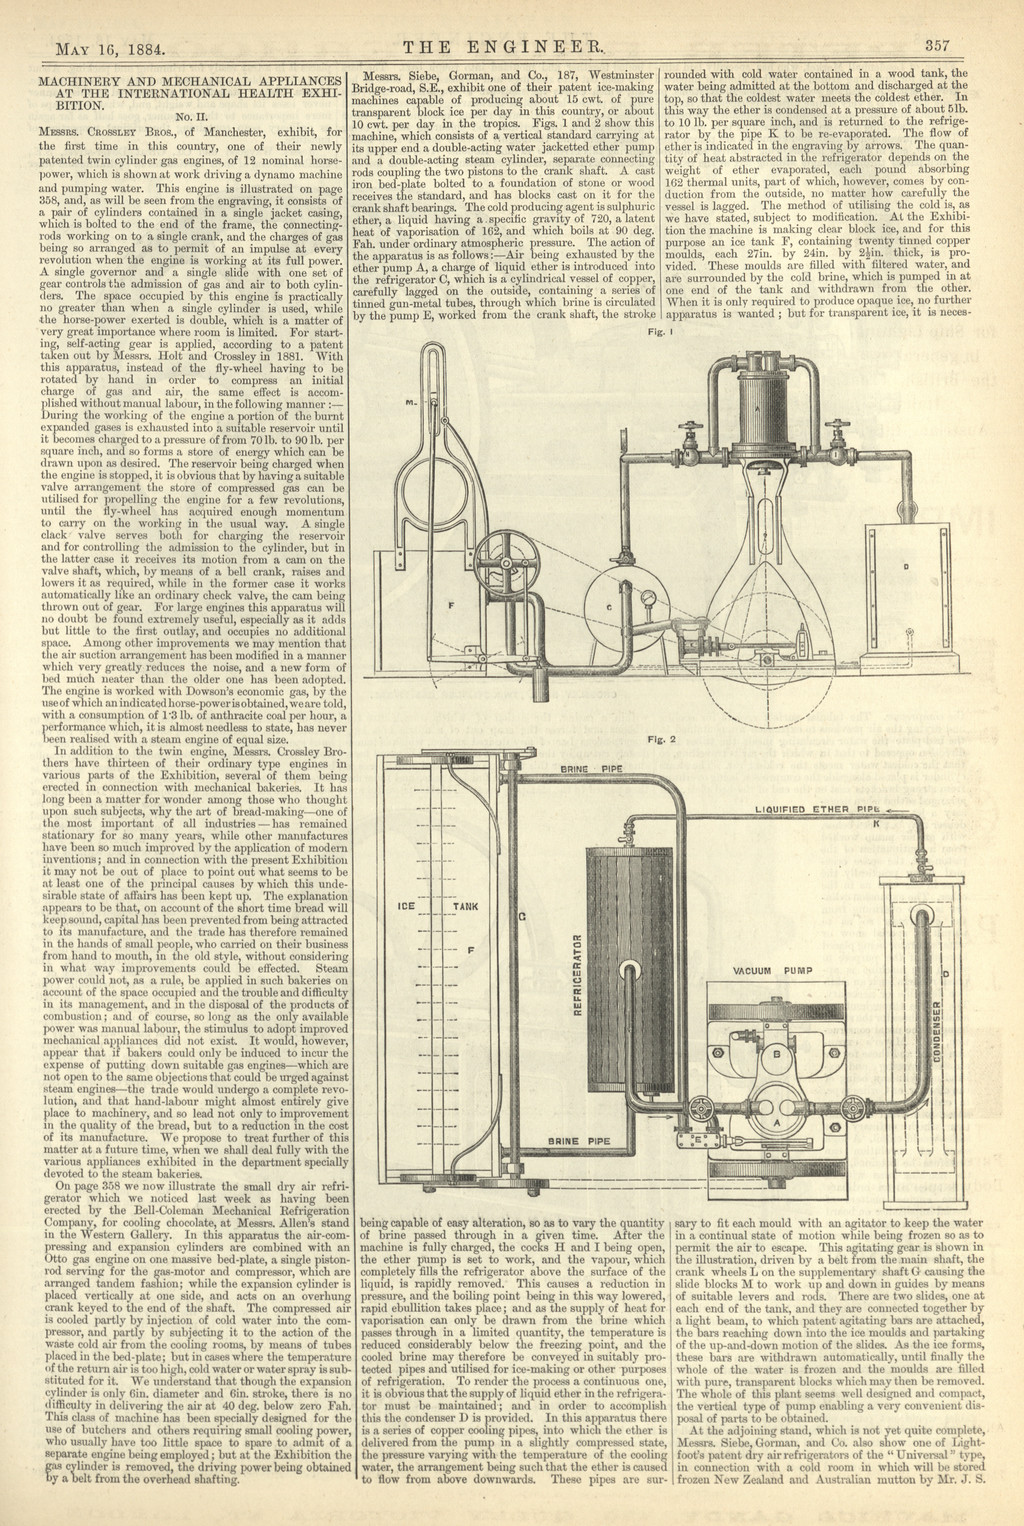 The Engineer, Vol.57, 16 May